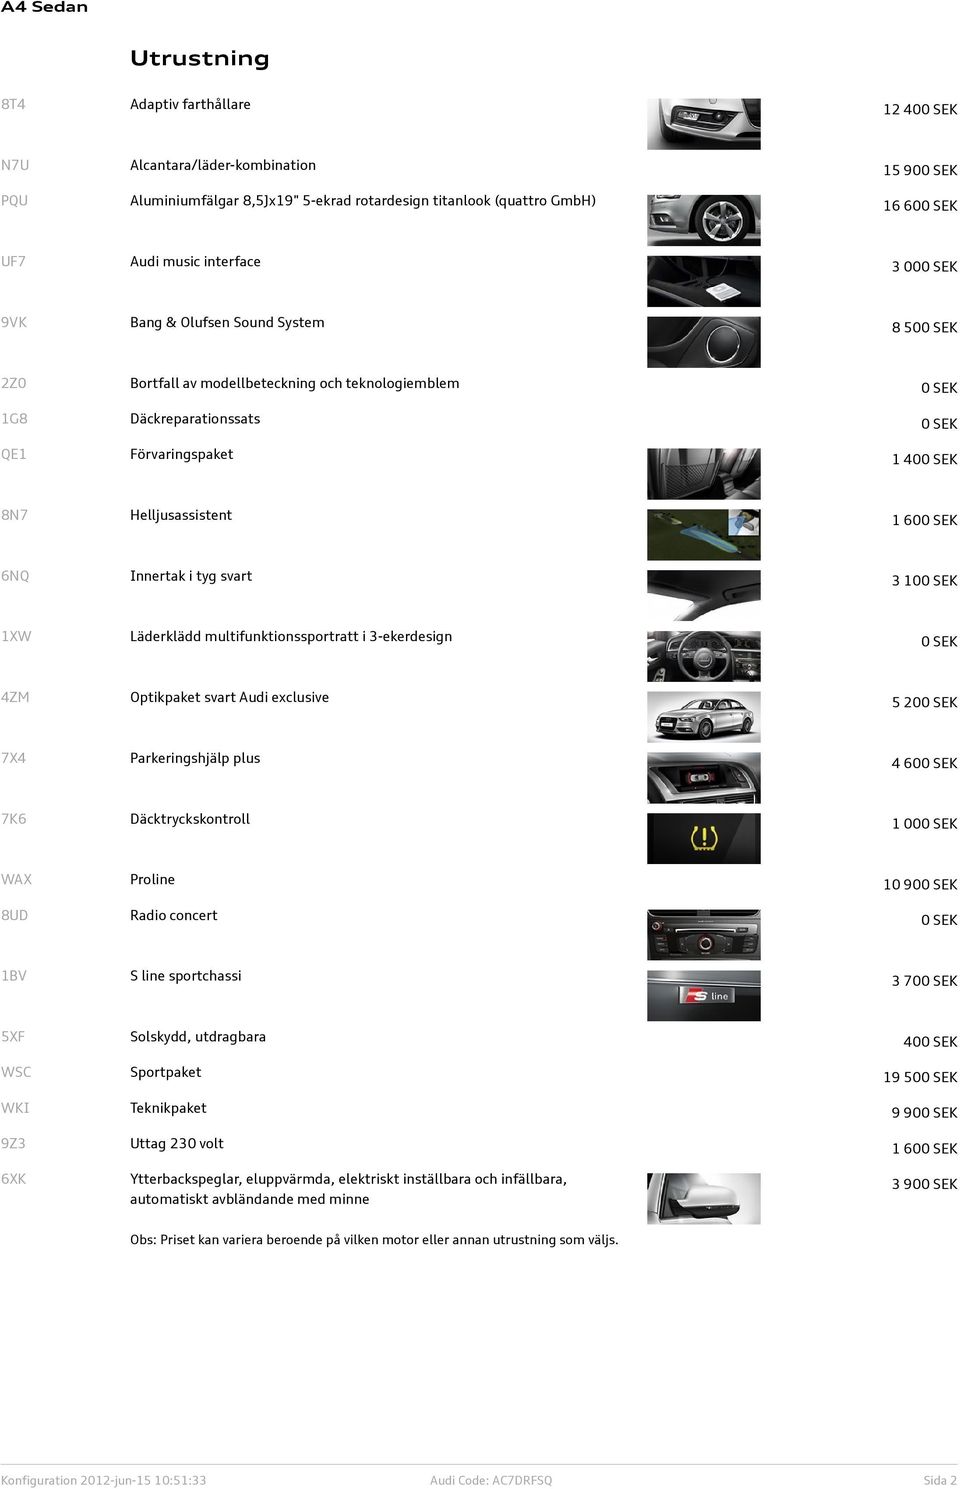 SEK 6NQ Innertak i tyg svart 3 100 SEK 1XW Läderklädd multifunktionssportratt i 3-ekerdesign 0 SEK 4ZM Optikpaket svart Audi exclusive 5 200 SEK 7X4 Parkeringshjälp plus 4 600 SEK 7K6